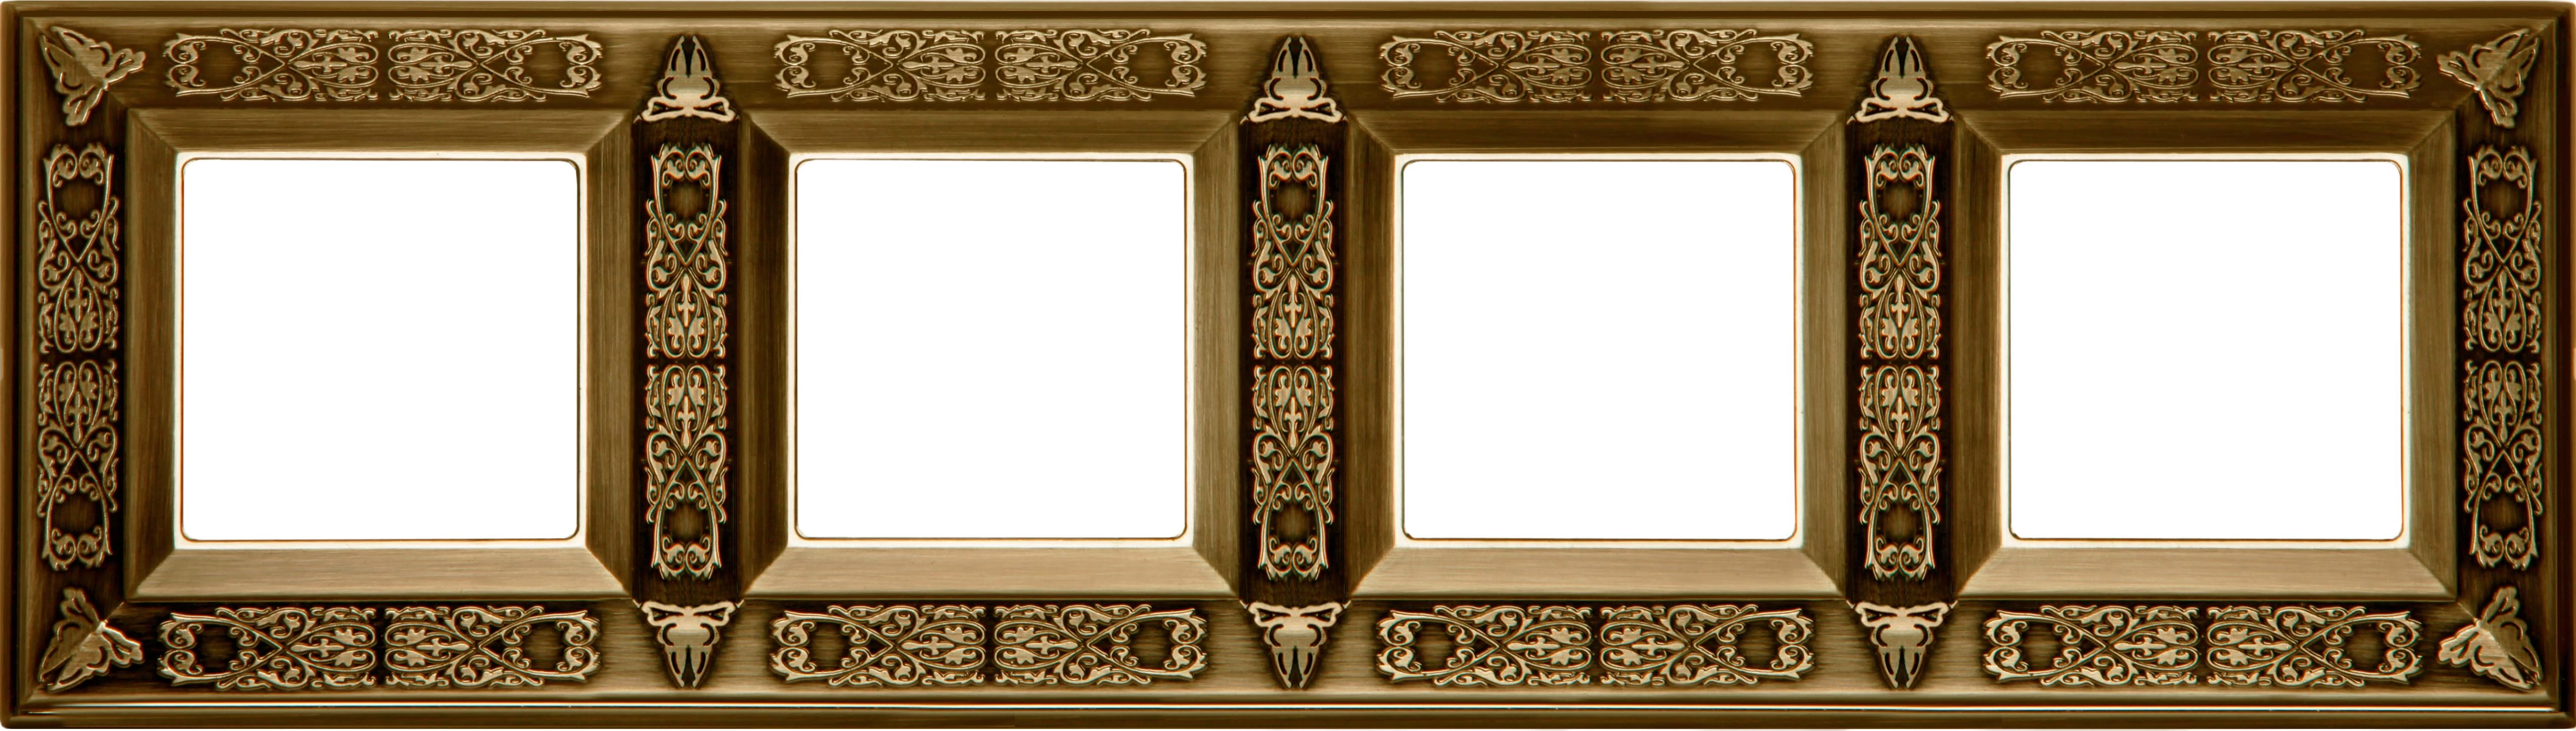  артикул FD01414PB название Рамка 4-ая (четверная), цвет Светлая бронза, Granada, Fede